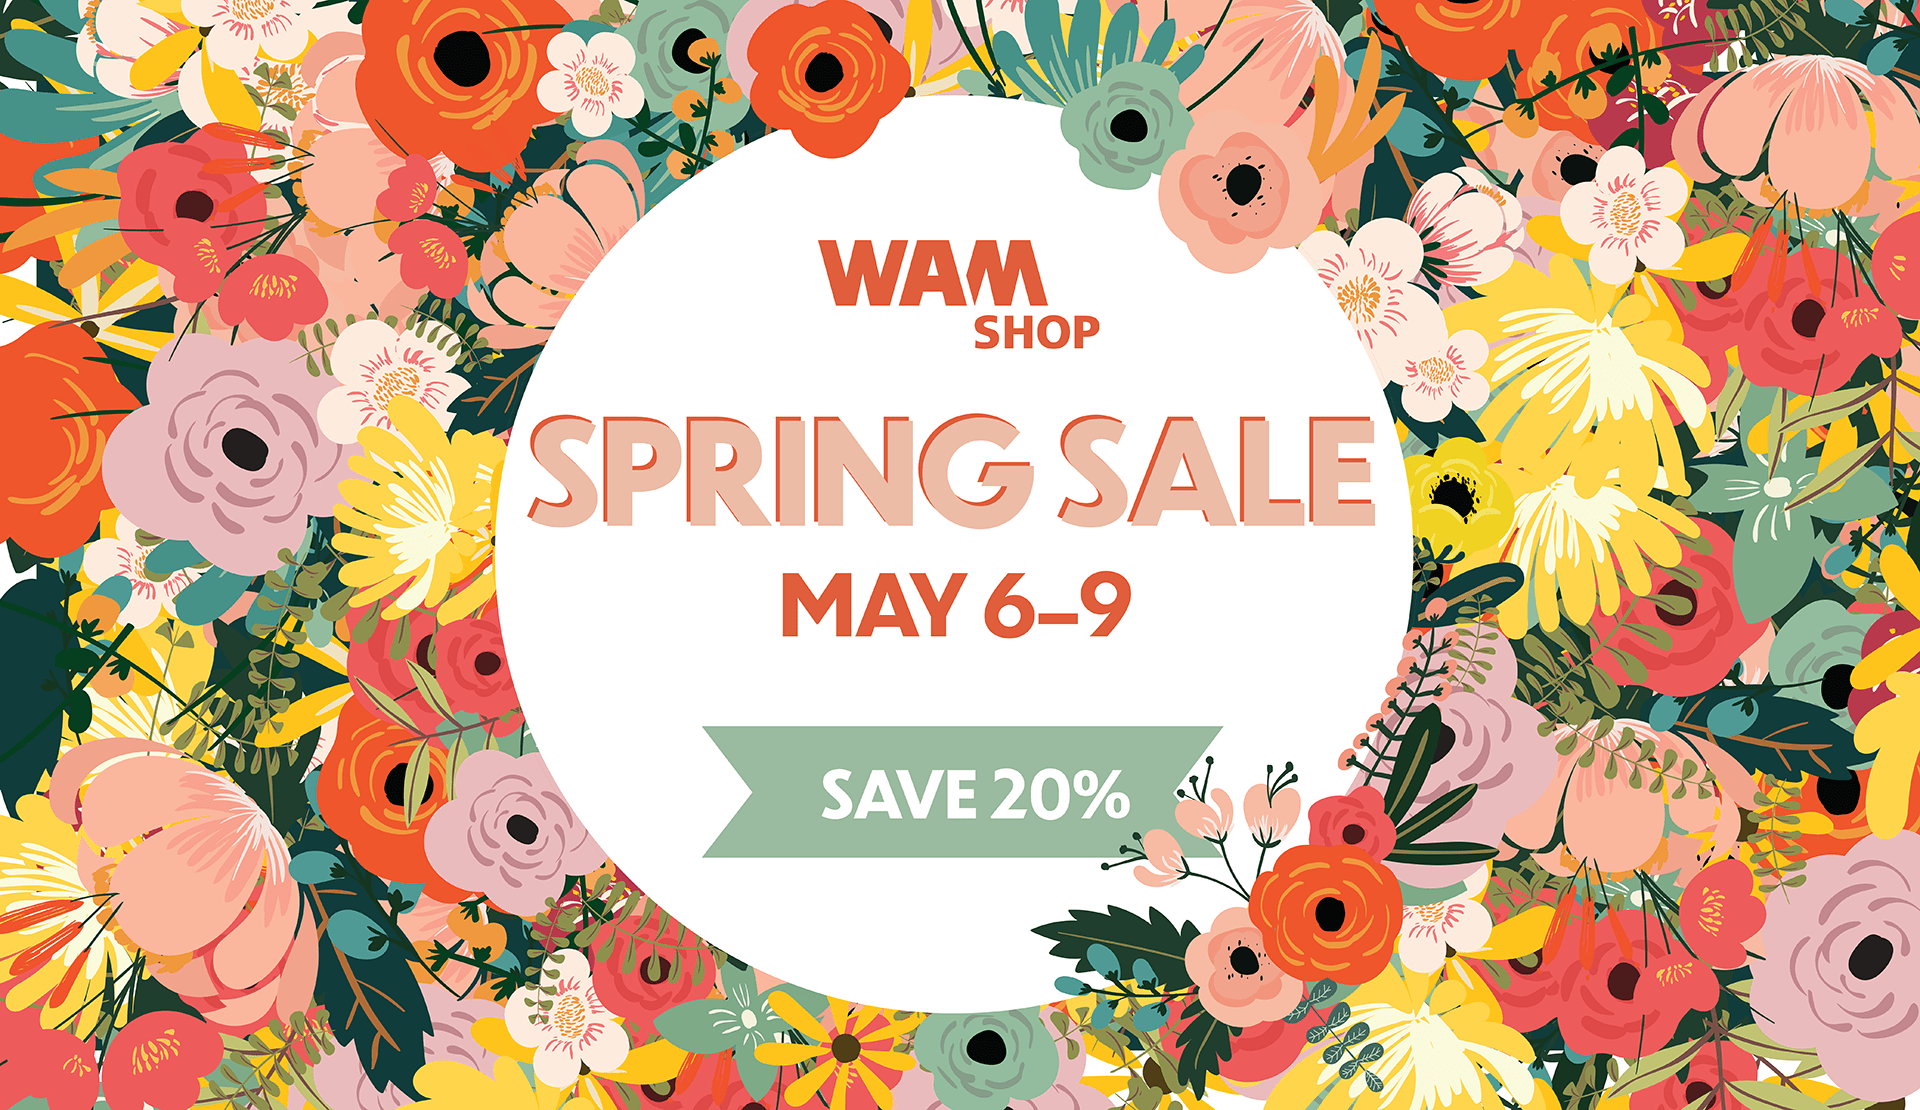 WAM Shop spring sale banner